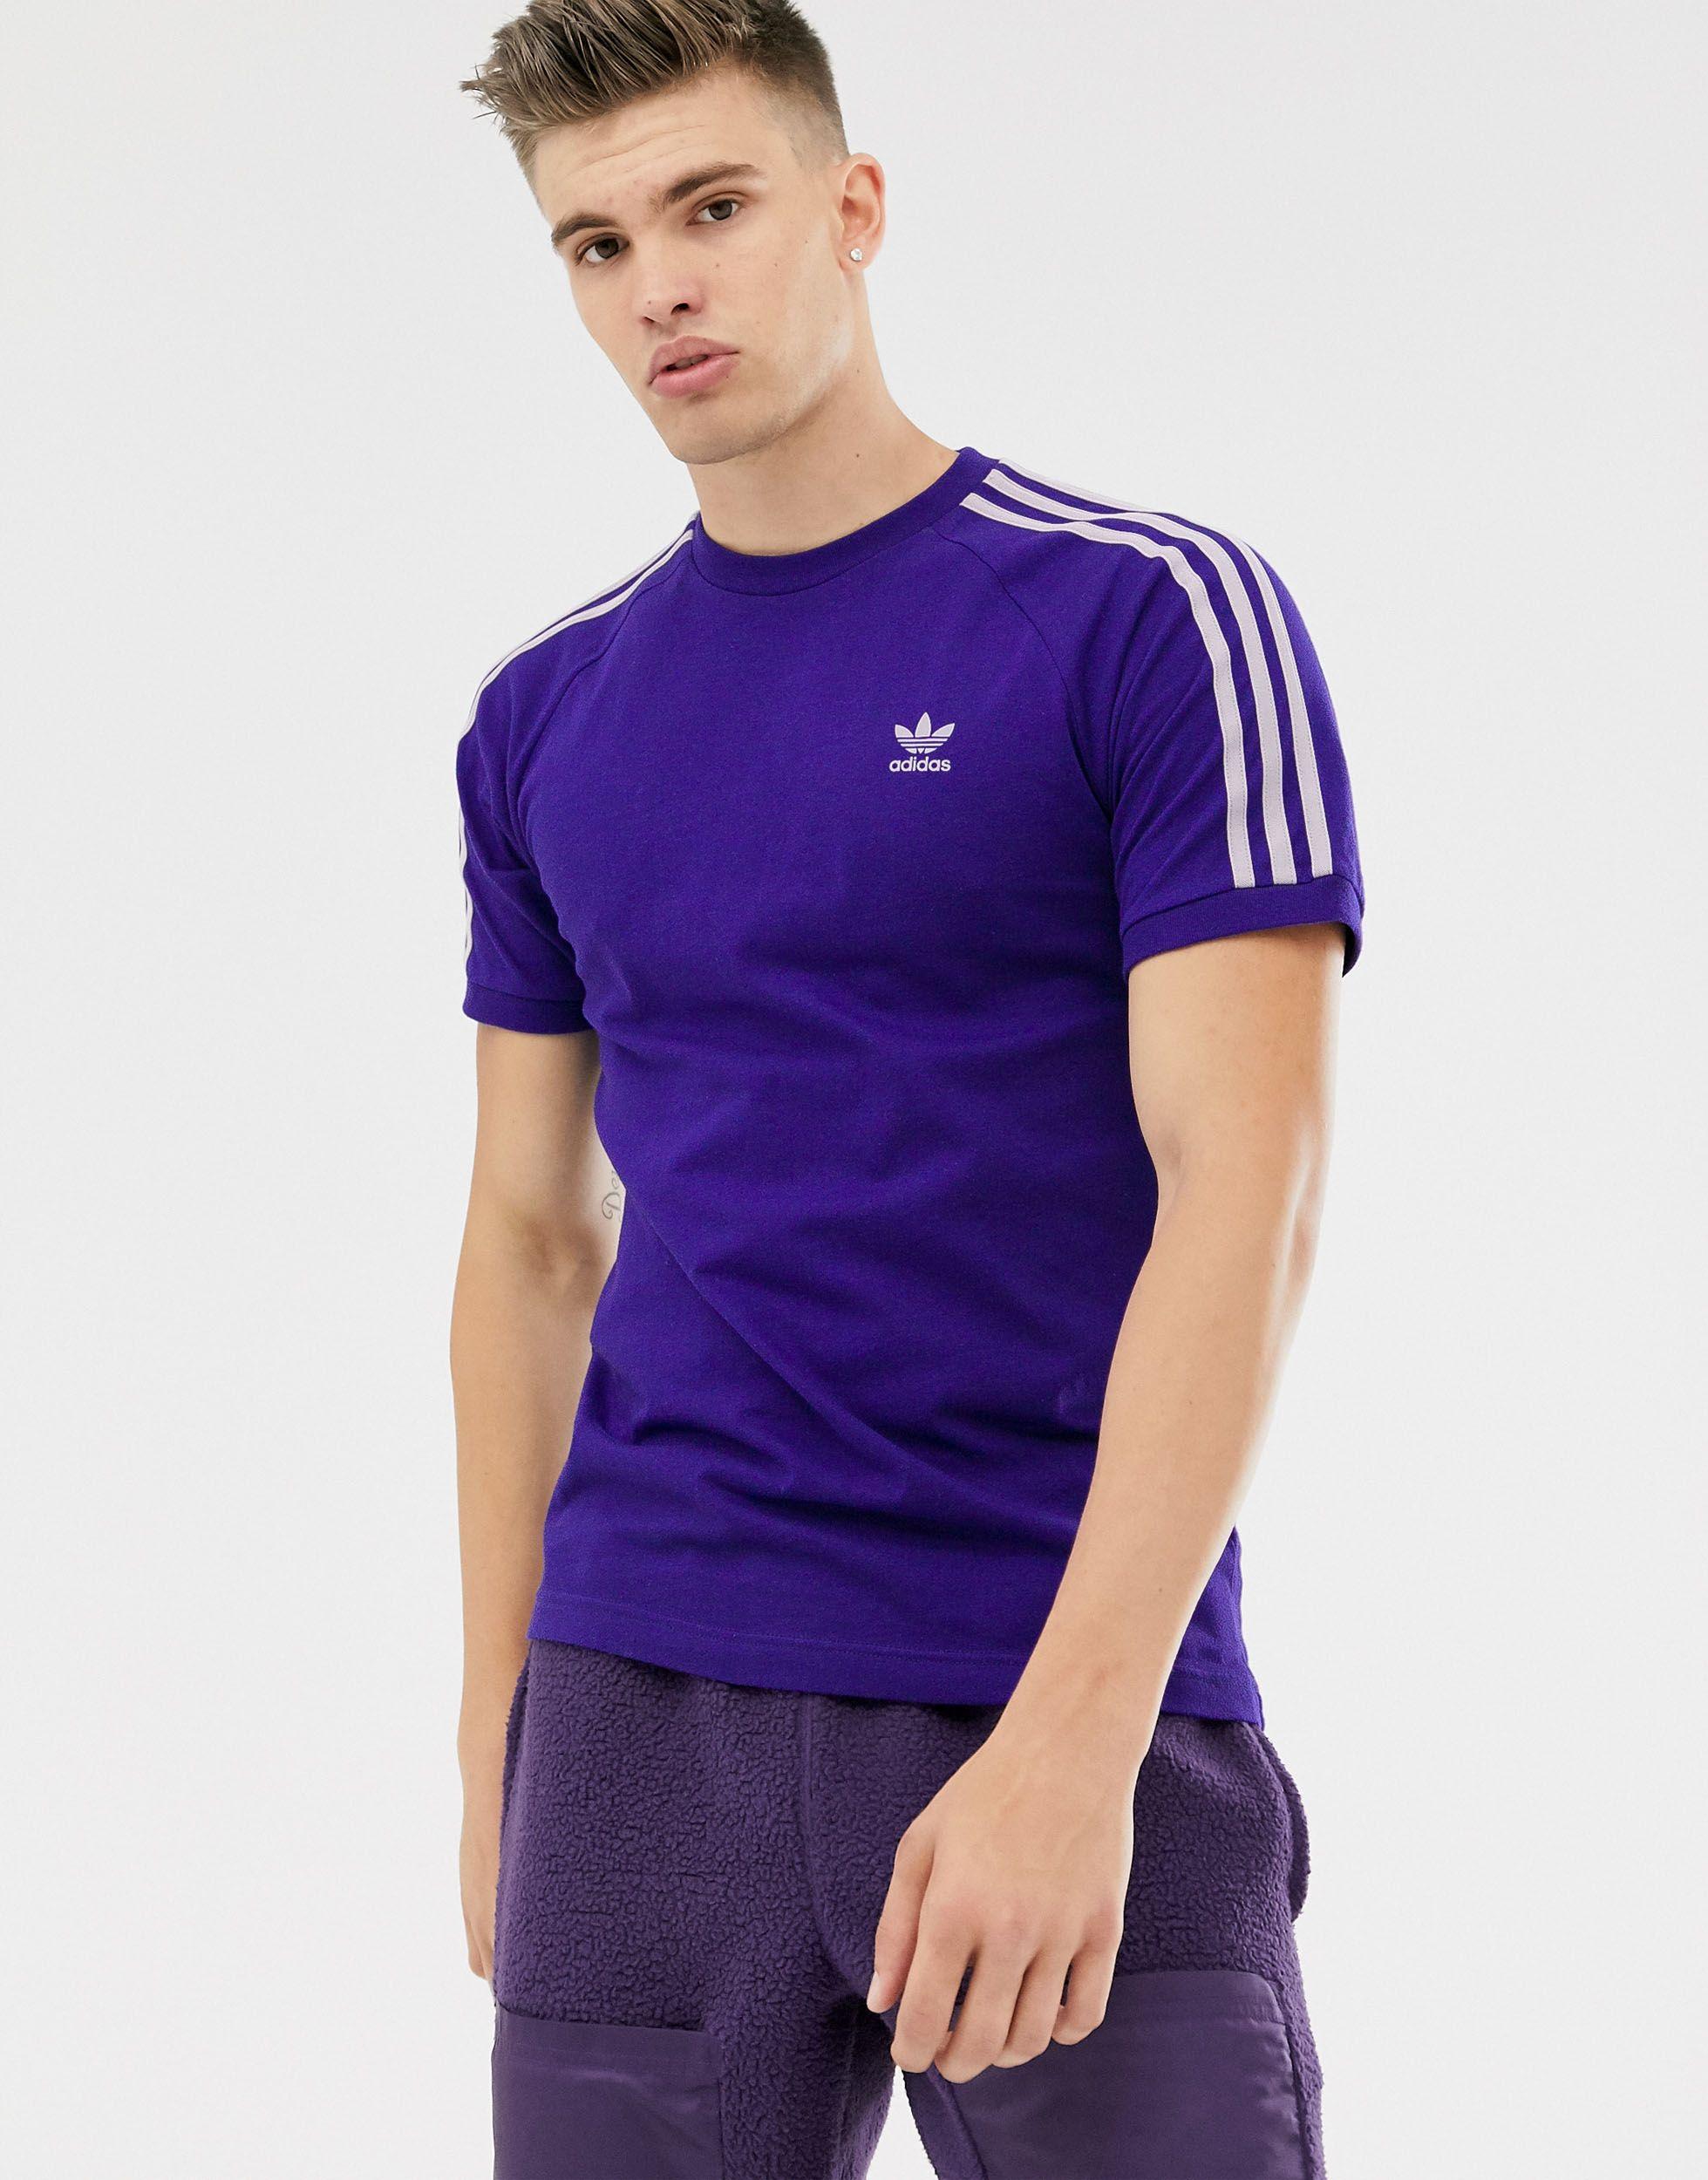 Originals Three Stripe T-shirt in Purple for Men Lyst